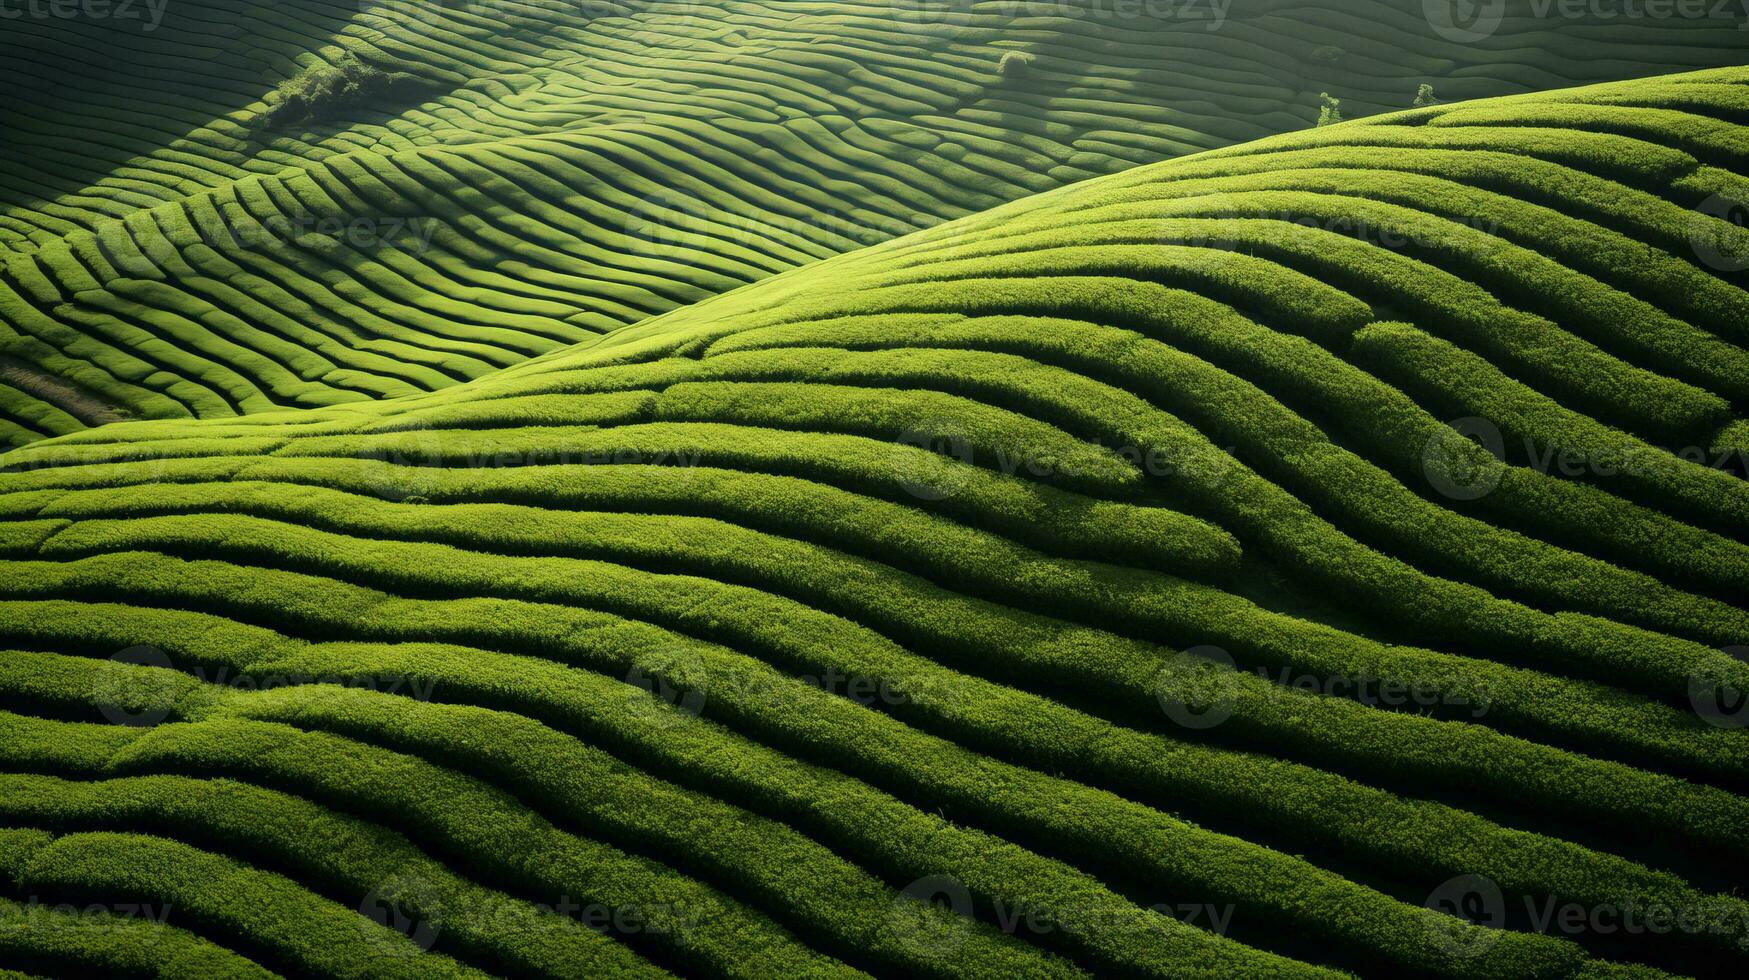 ai gegenereerd groen thee plantage, top visie structuur foto